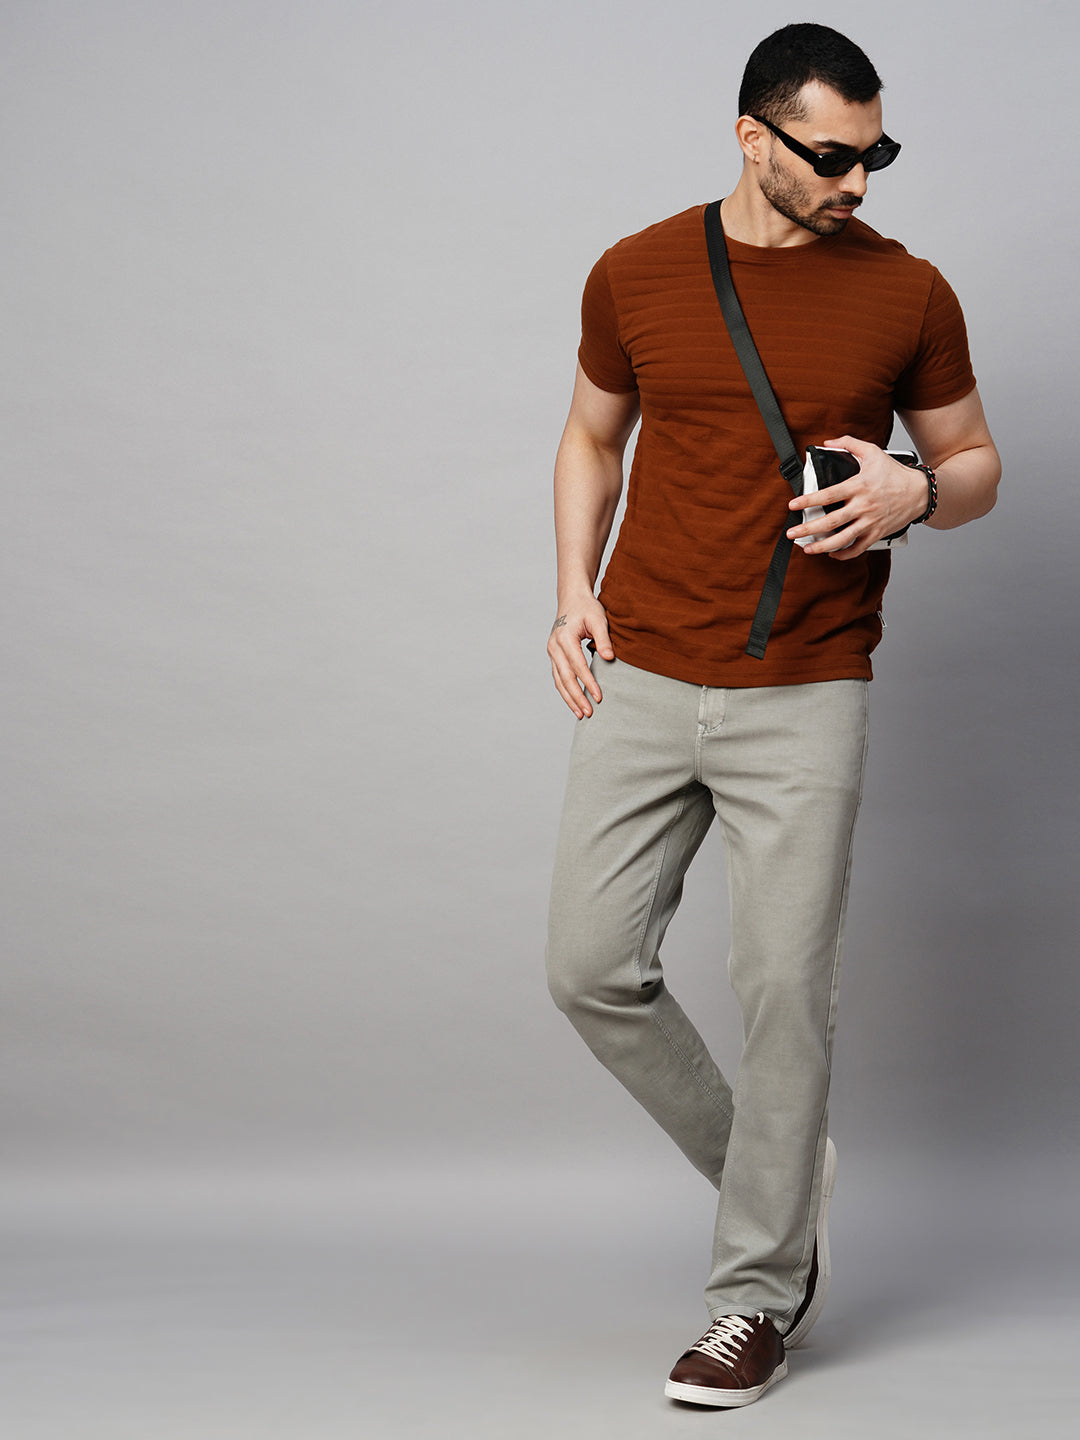 Genips Men's Slim Fit Cotton Stretch Casual 5 Pocket Trouser Cement Color